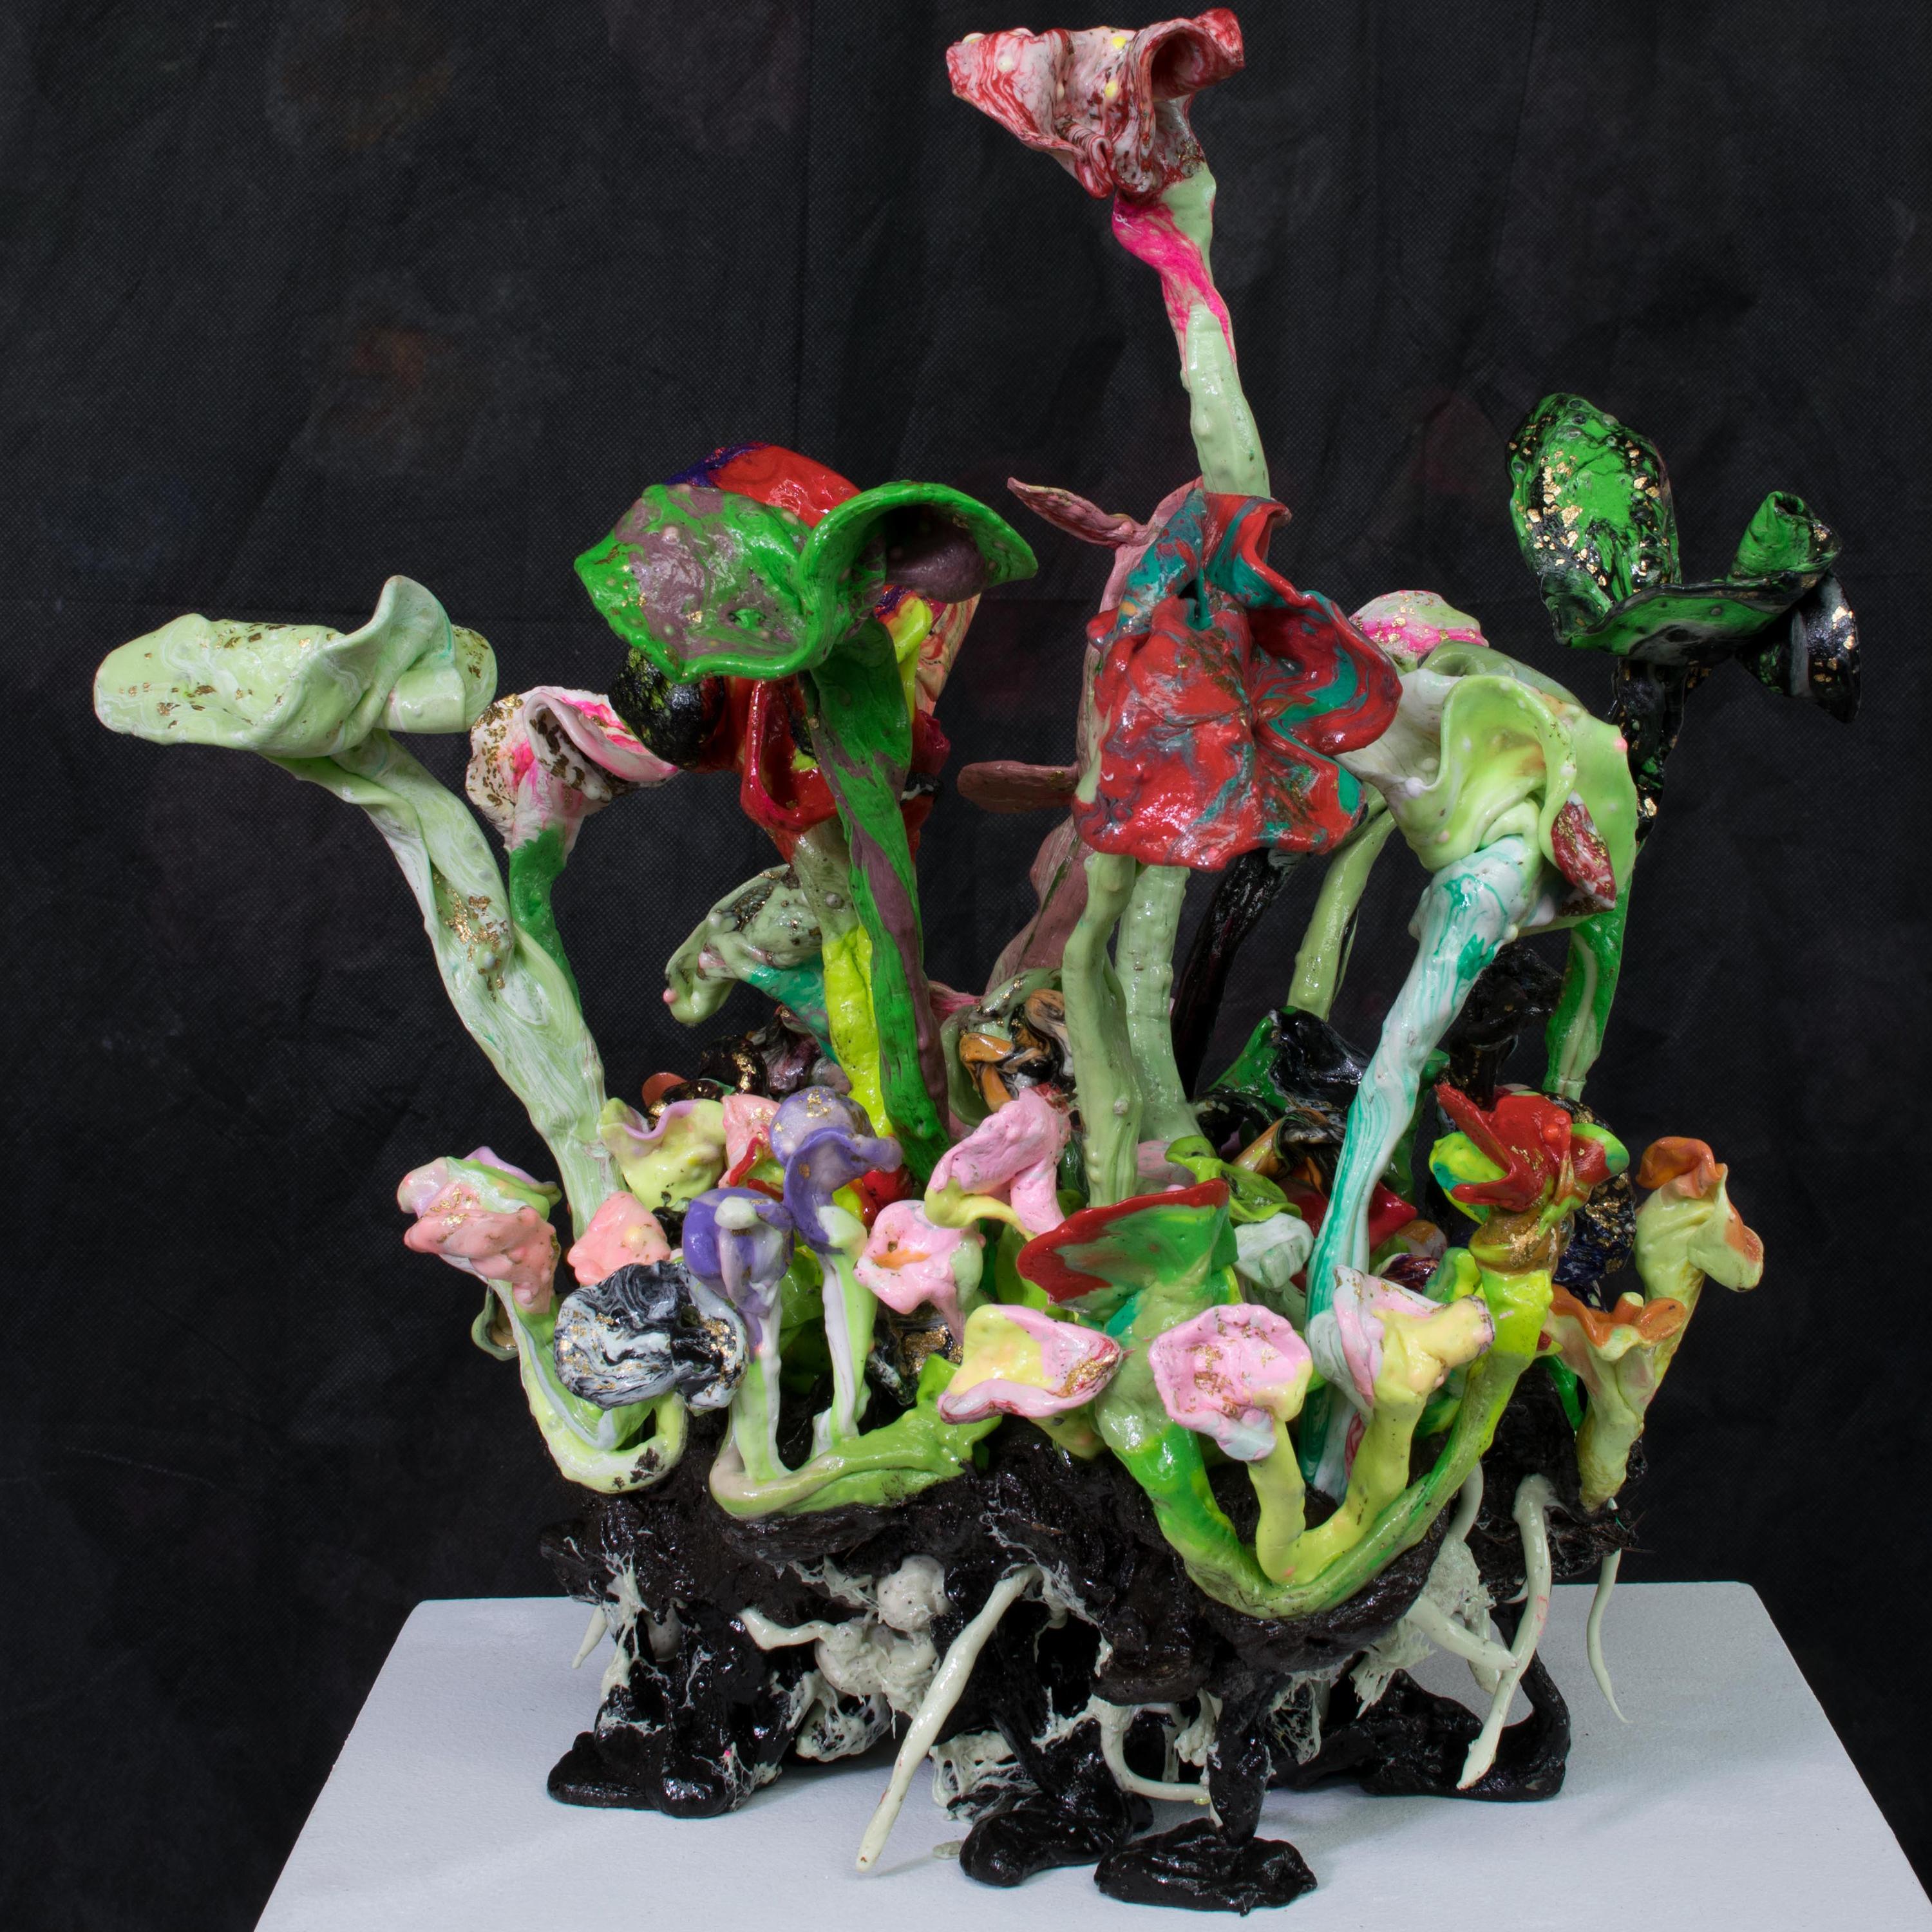 Stranger Flowers - I - Contemporary Mixed Media Art by Stefan Gross